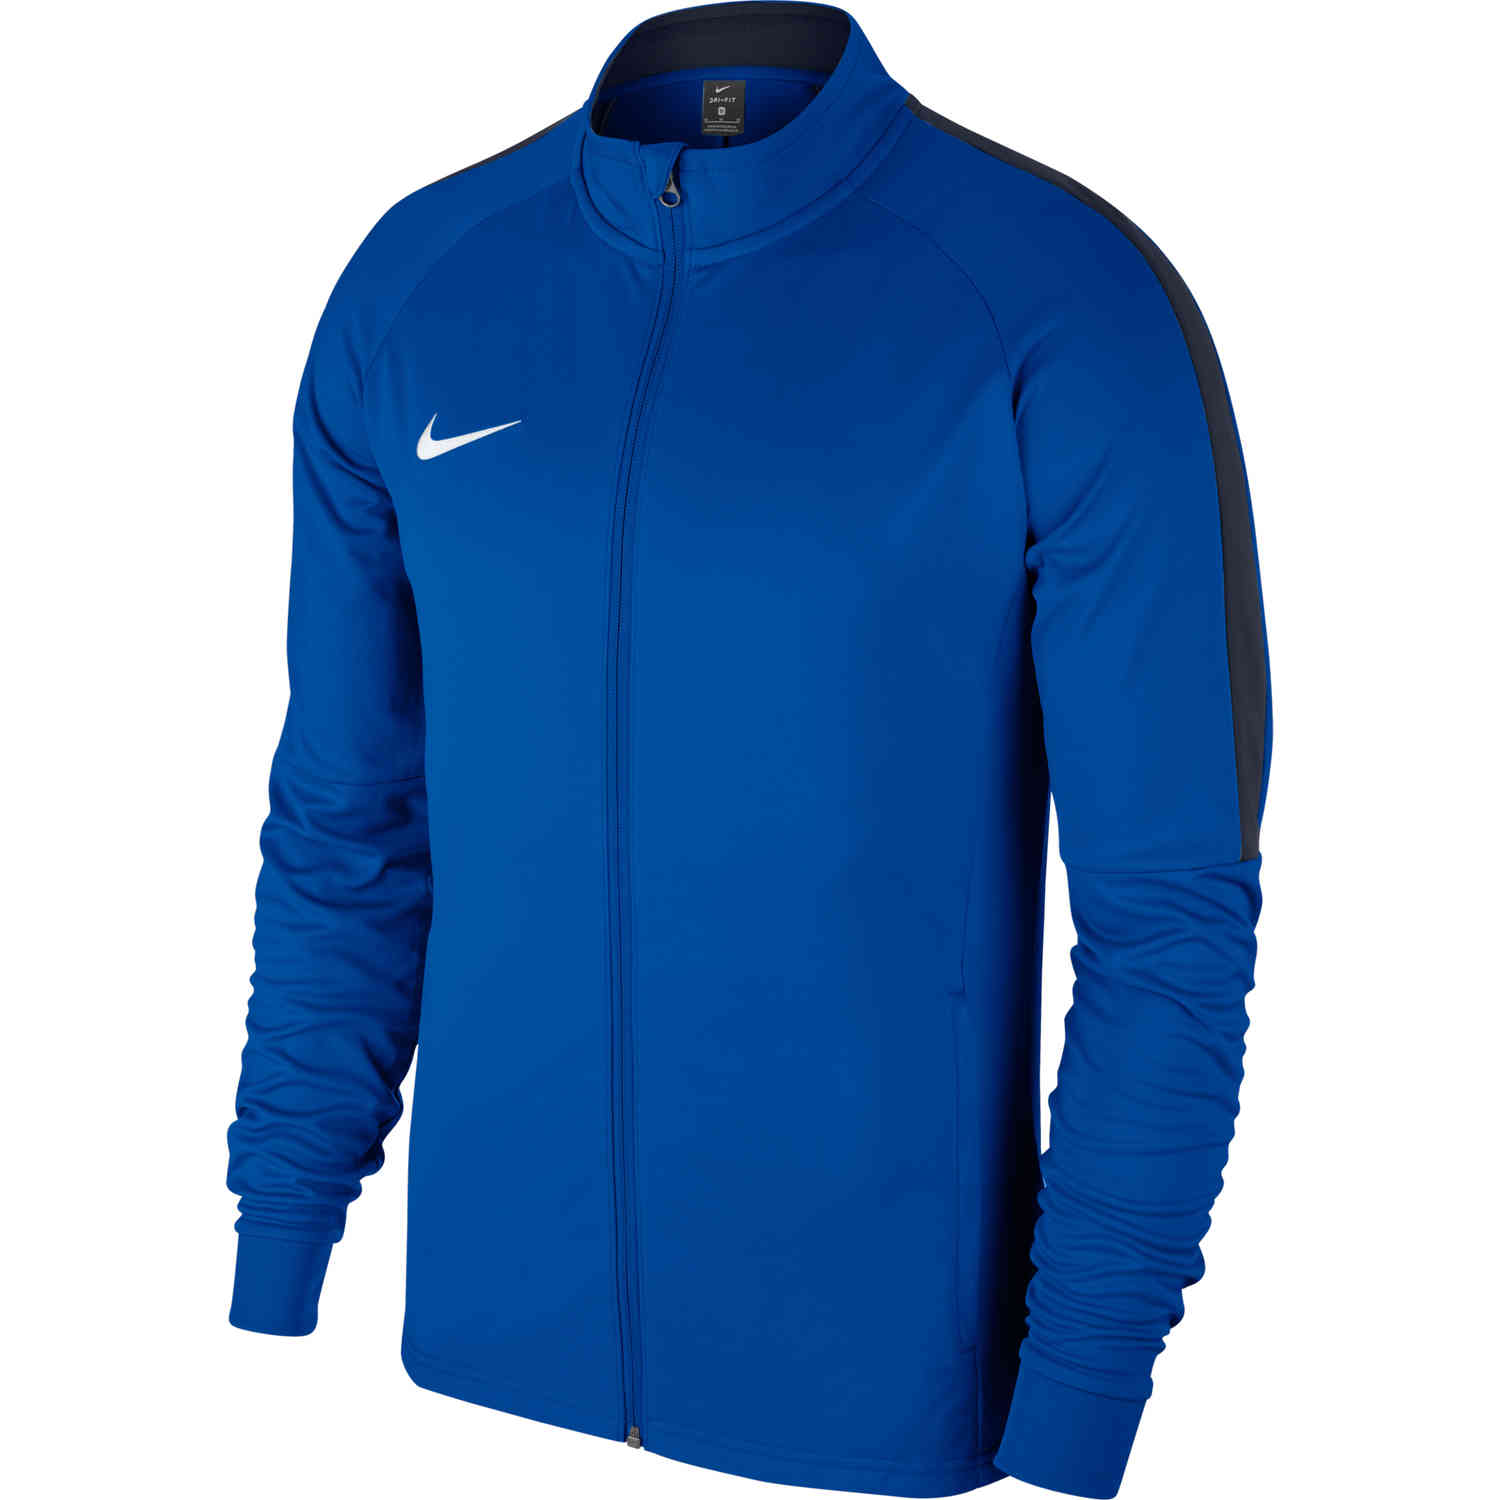 Nike Academy18 Track Jacket - Royal Blue - SoccerPro